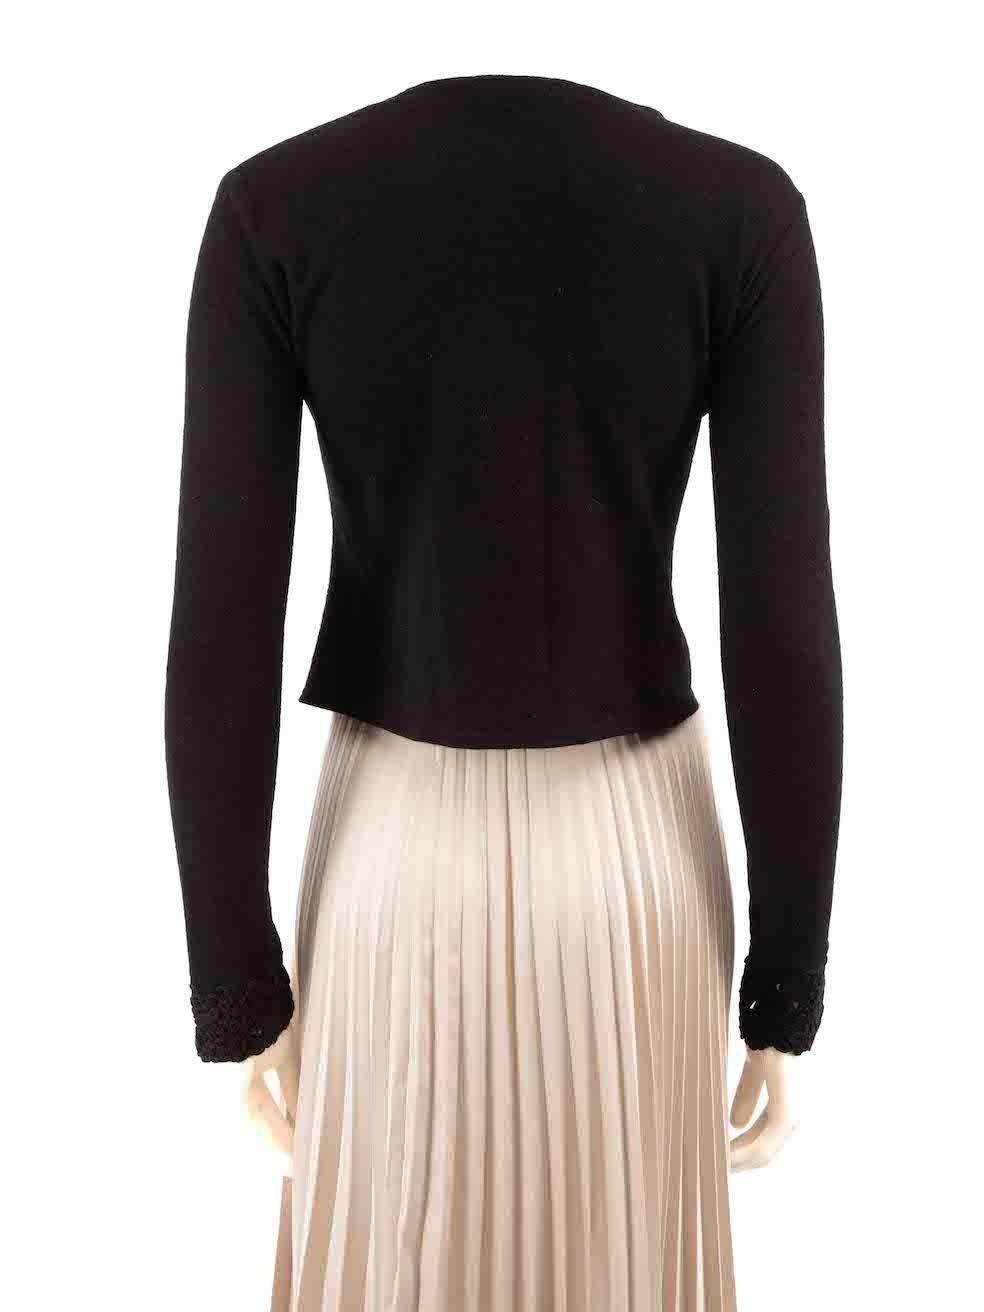 Nicole Farhi Black Wool Lace Cuff Cardigan Size S In Good Condition For Sale In London, GB